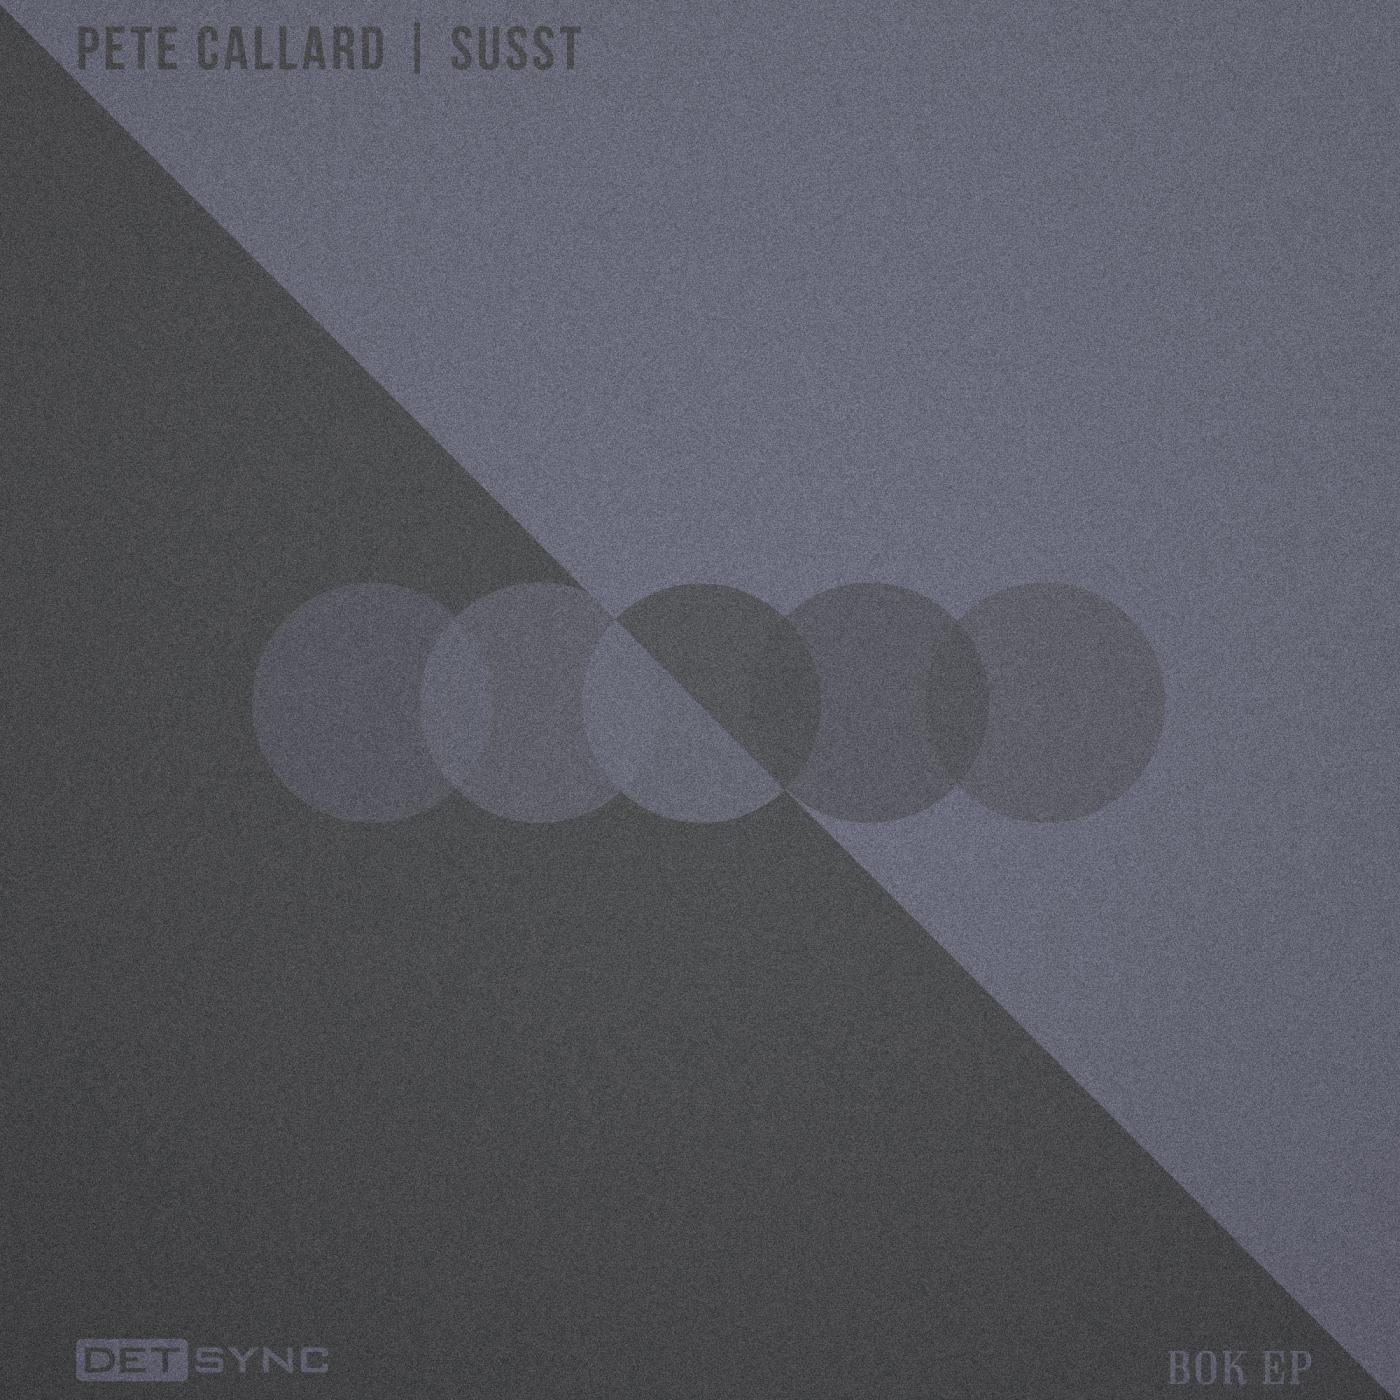 Pete Callard - Bok (Original Mix)